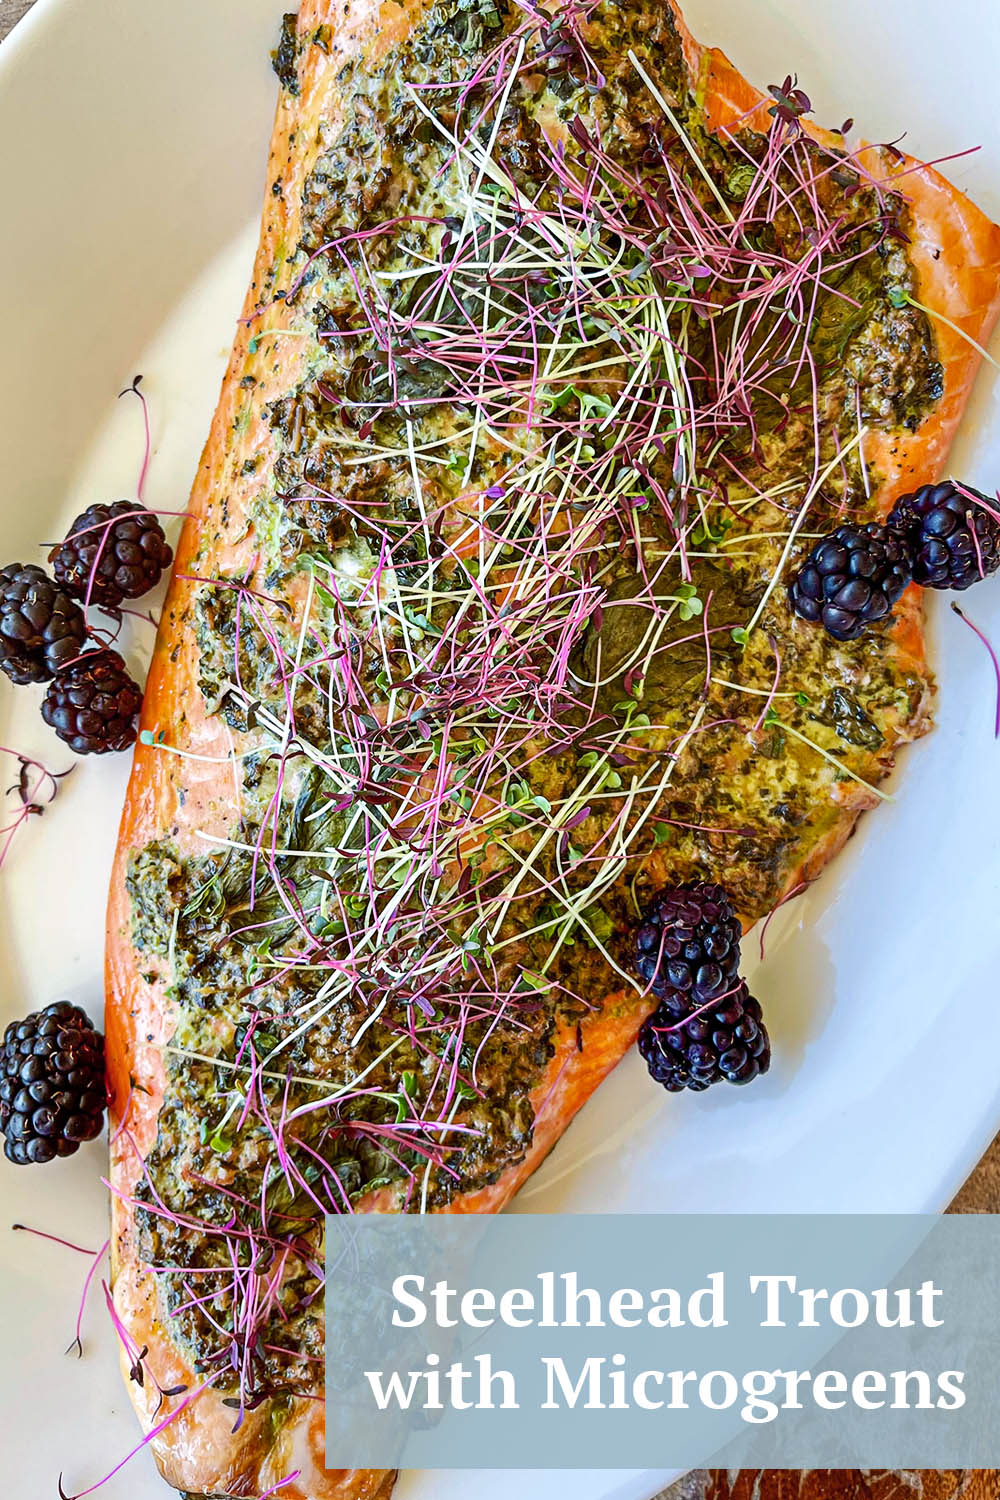 Pesto steelhead trout with microgreens and blackberries